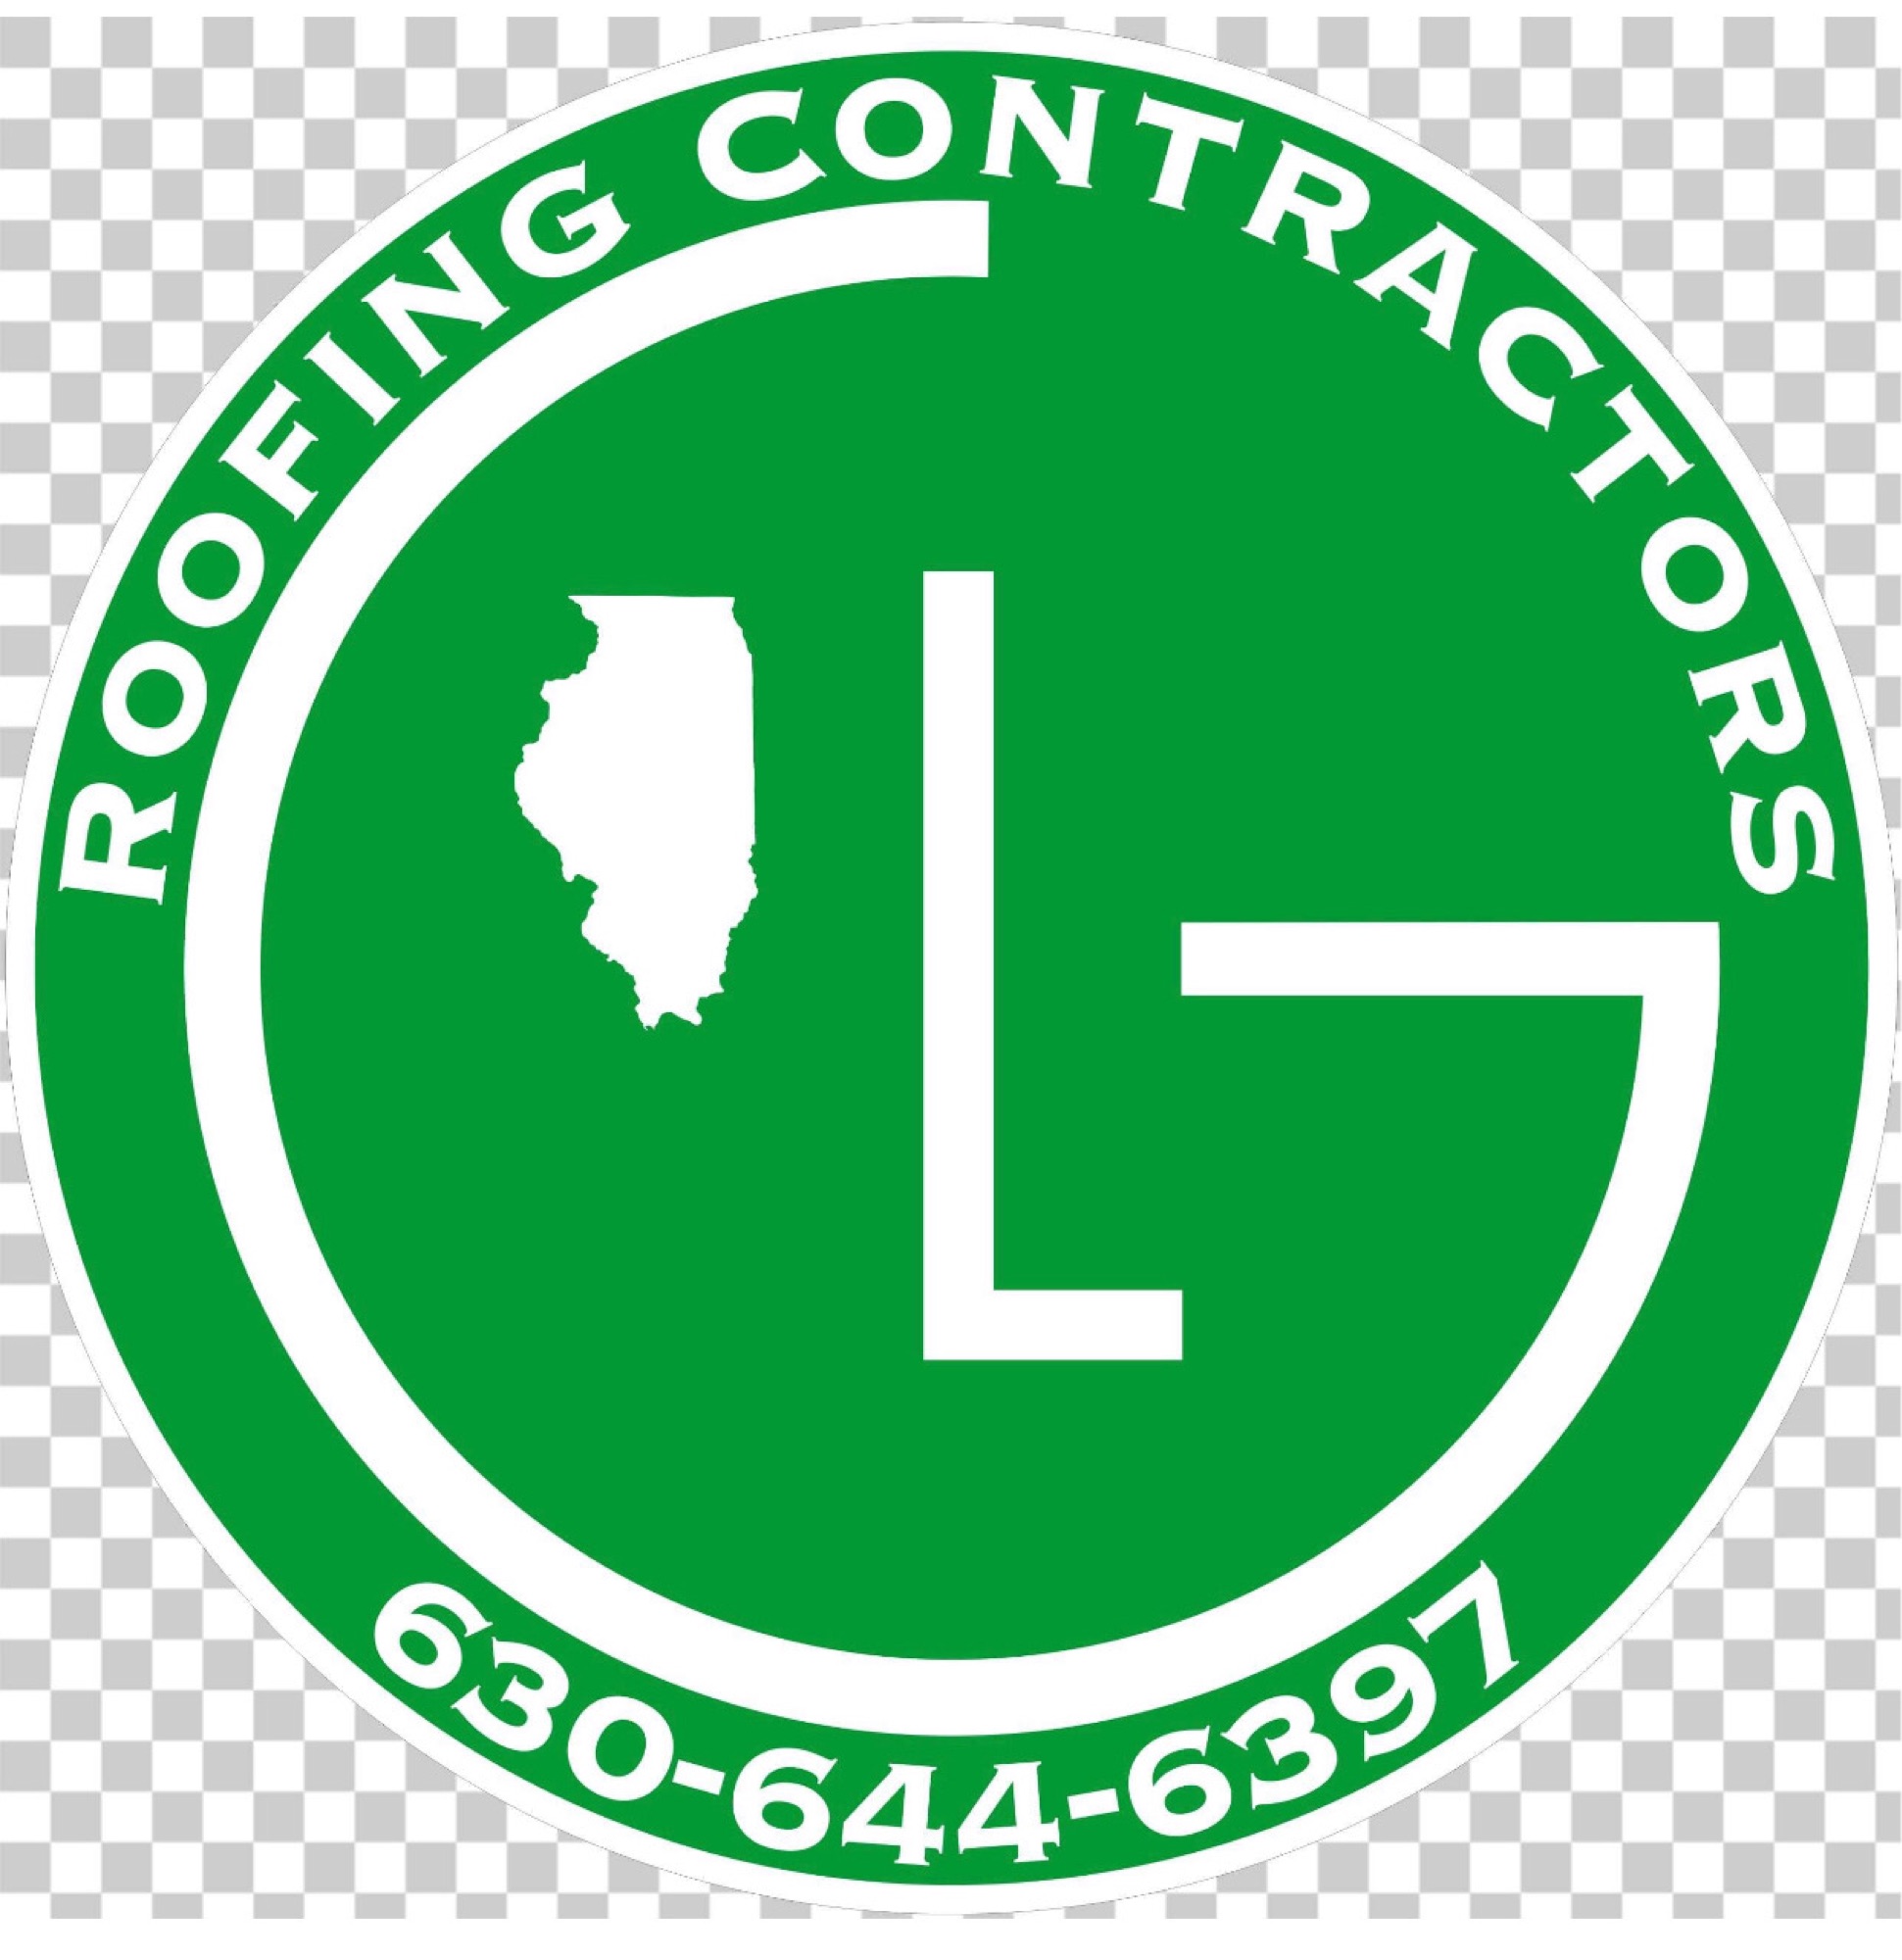 LG Roofing Contractors Logo